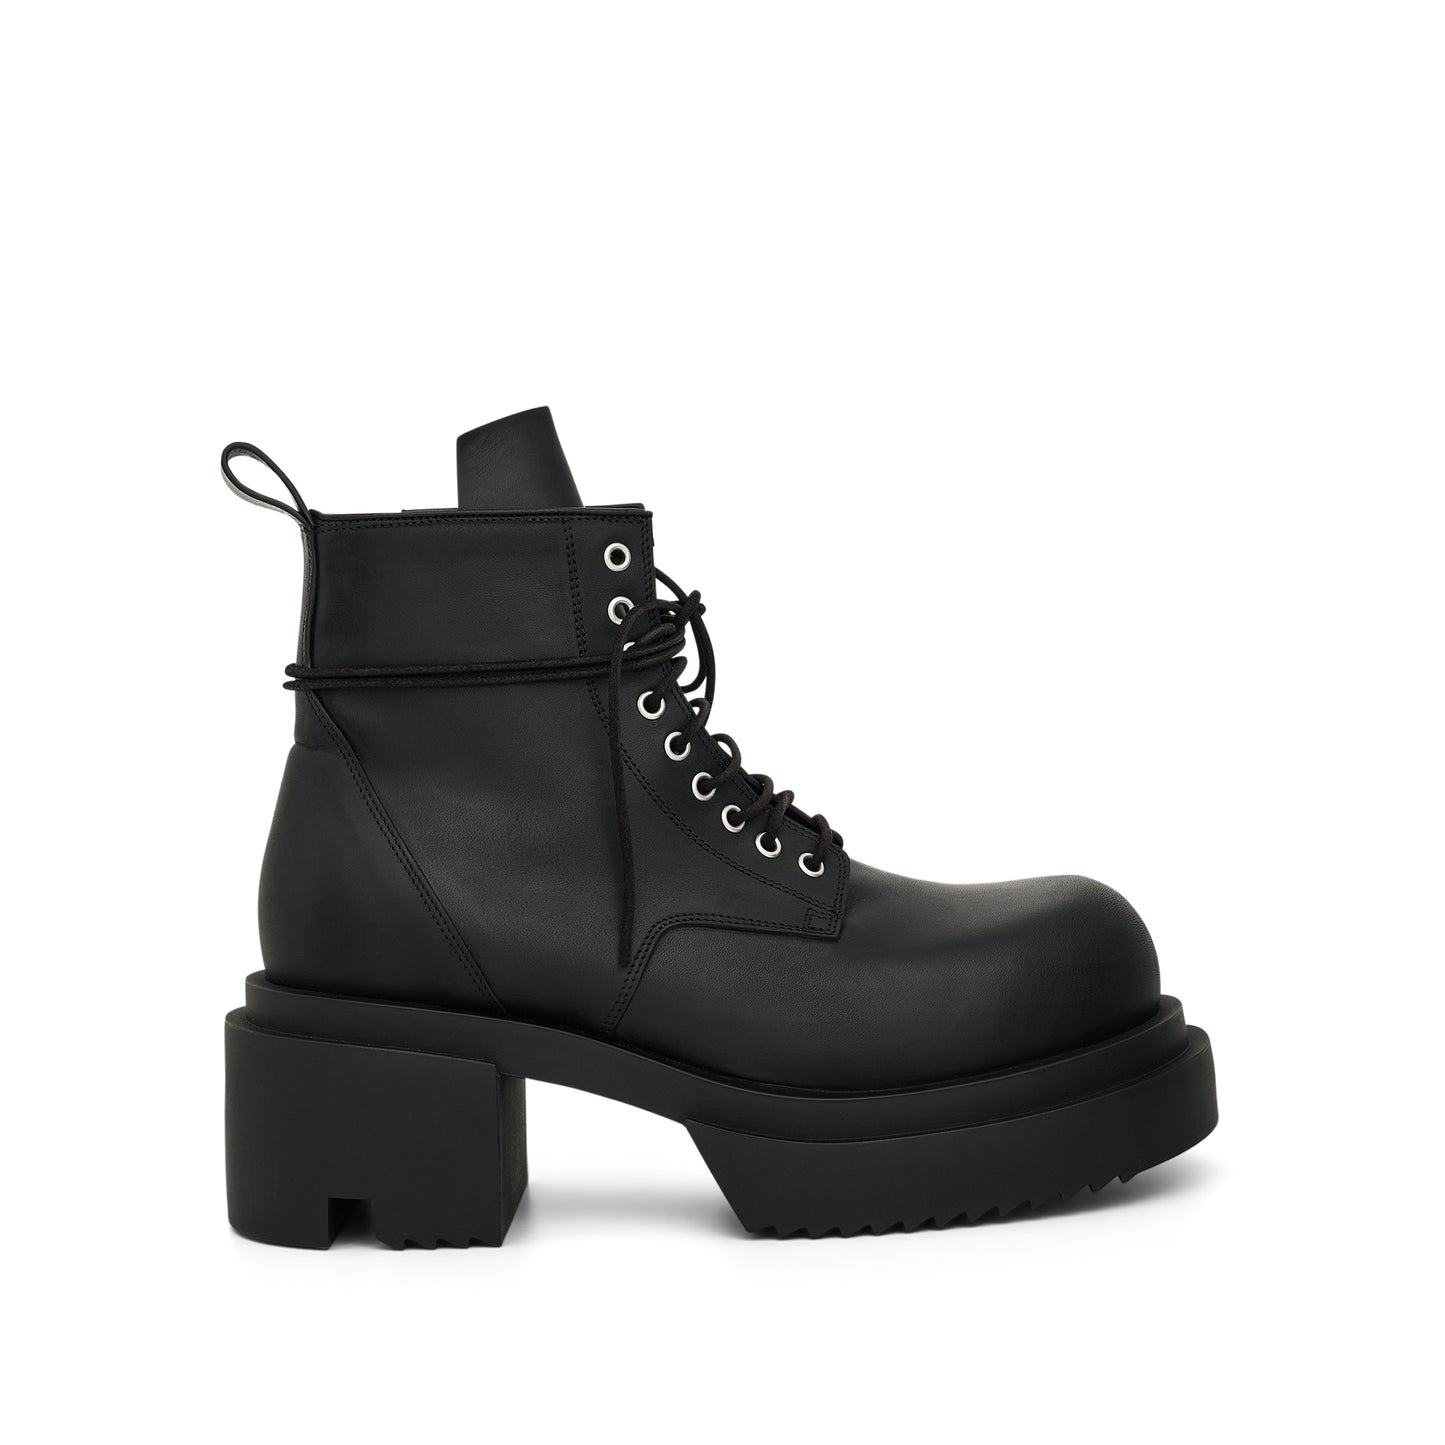 Low Army Bogun Boots in Black